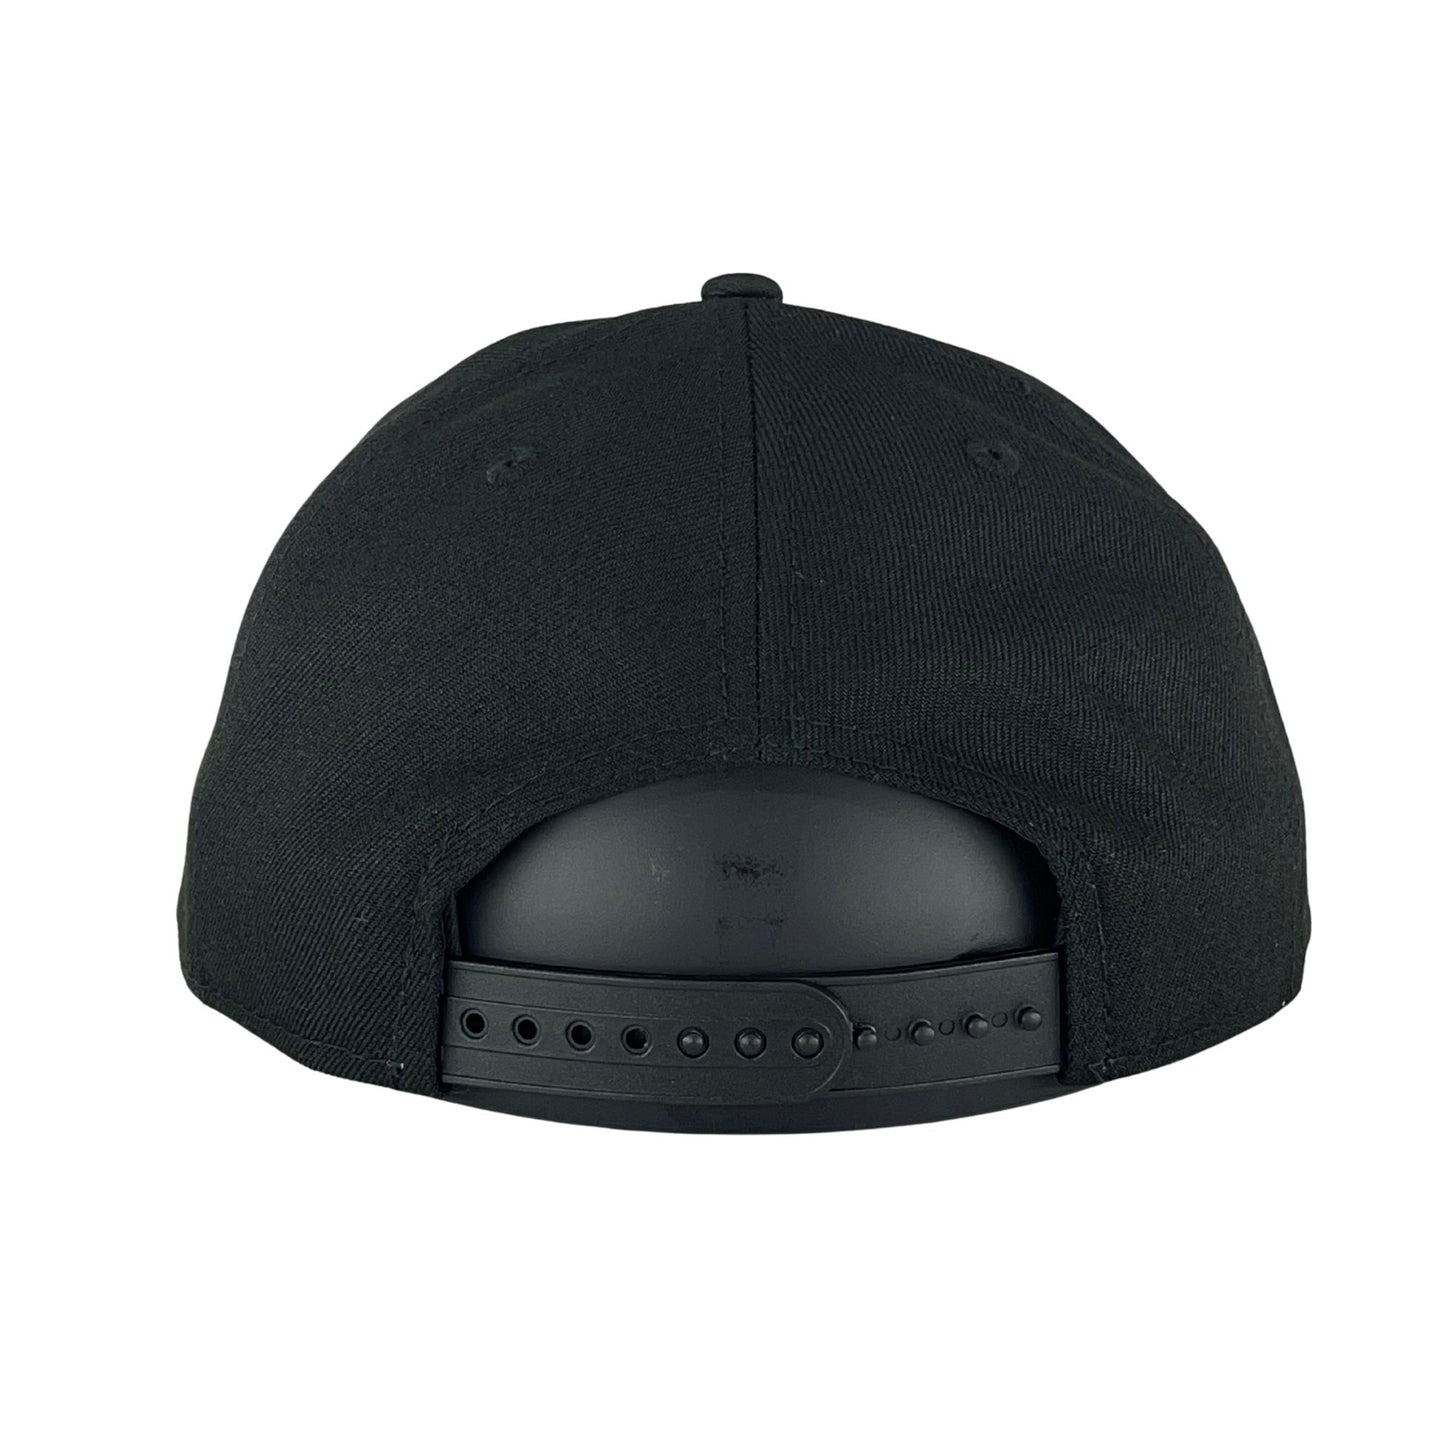 Chicago Cubs Cheetah Logo New Era 9FIFTY Black Snapback Hat